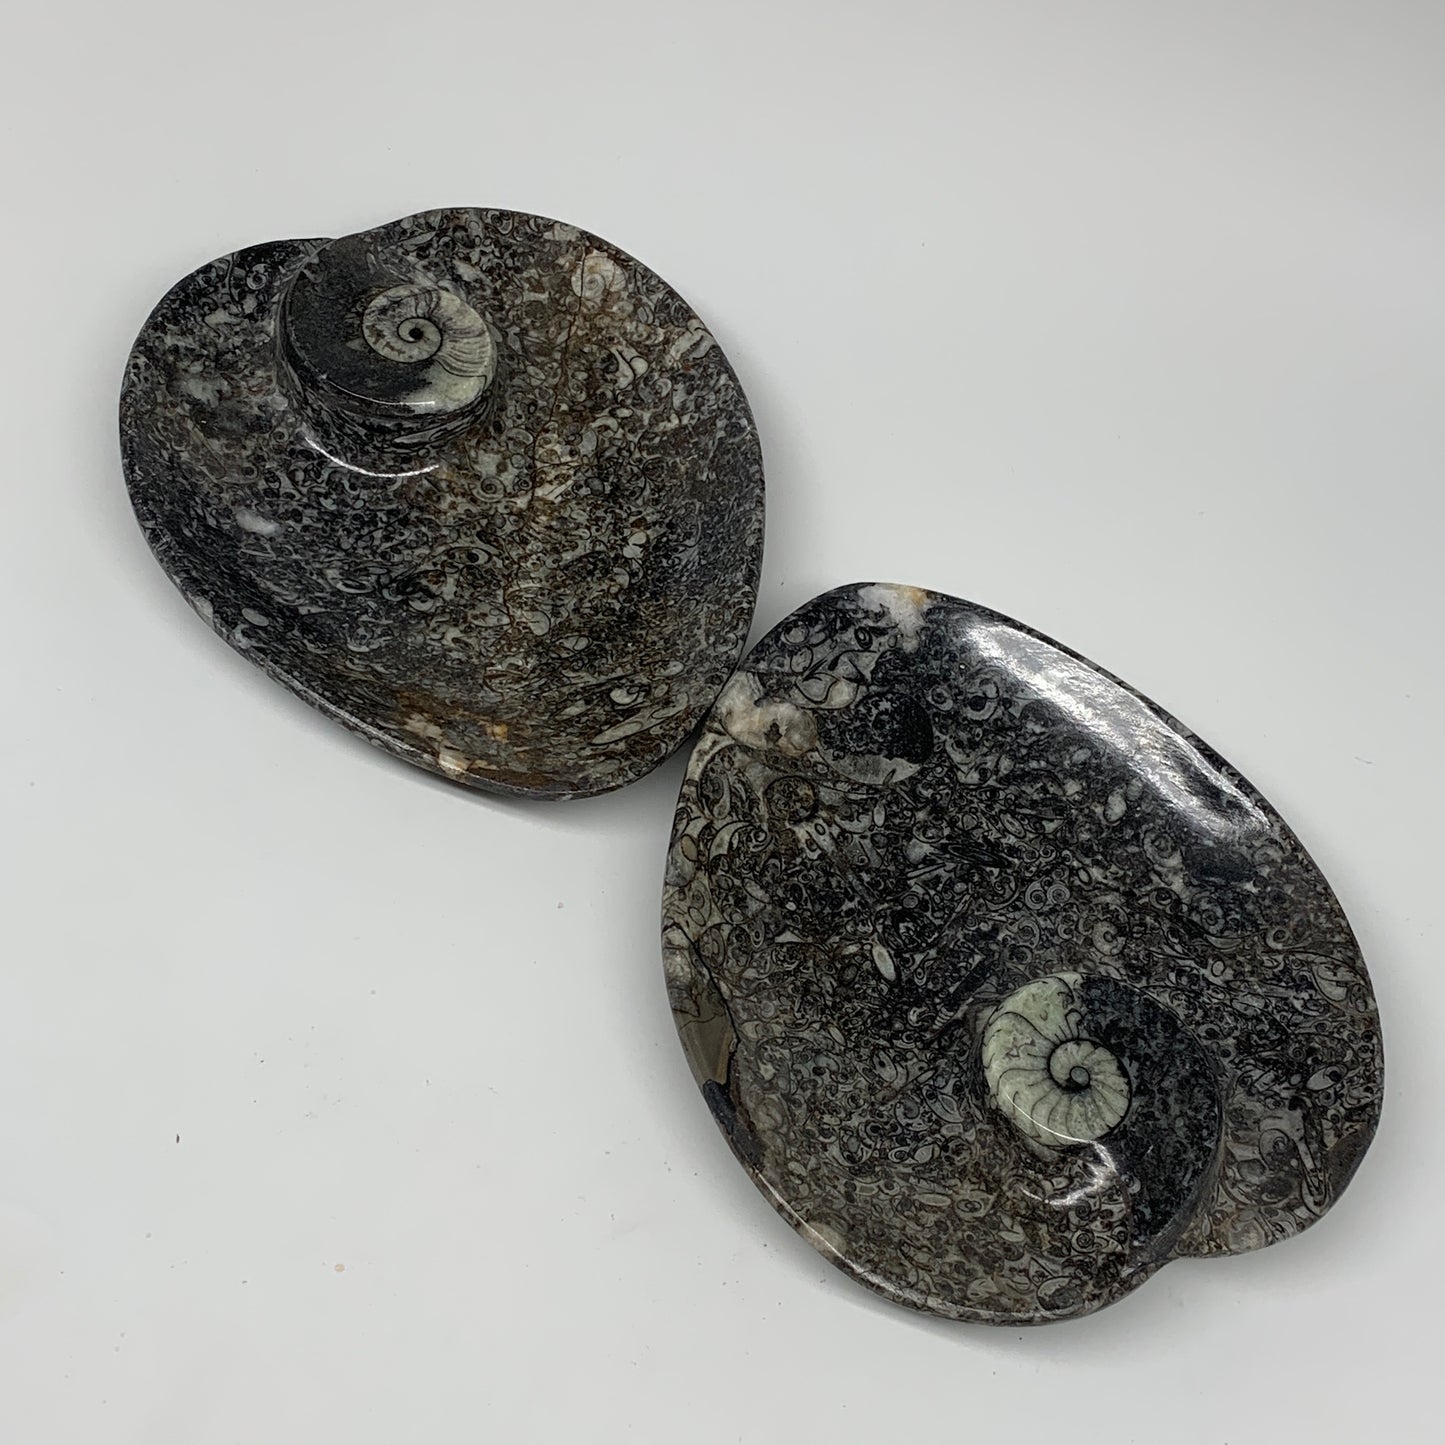 2pcs Set, 6.25"x5.25" Heart Fossils Orthoceras Ammonite Bowls @Morocco, B8485